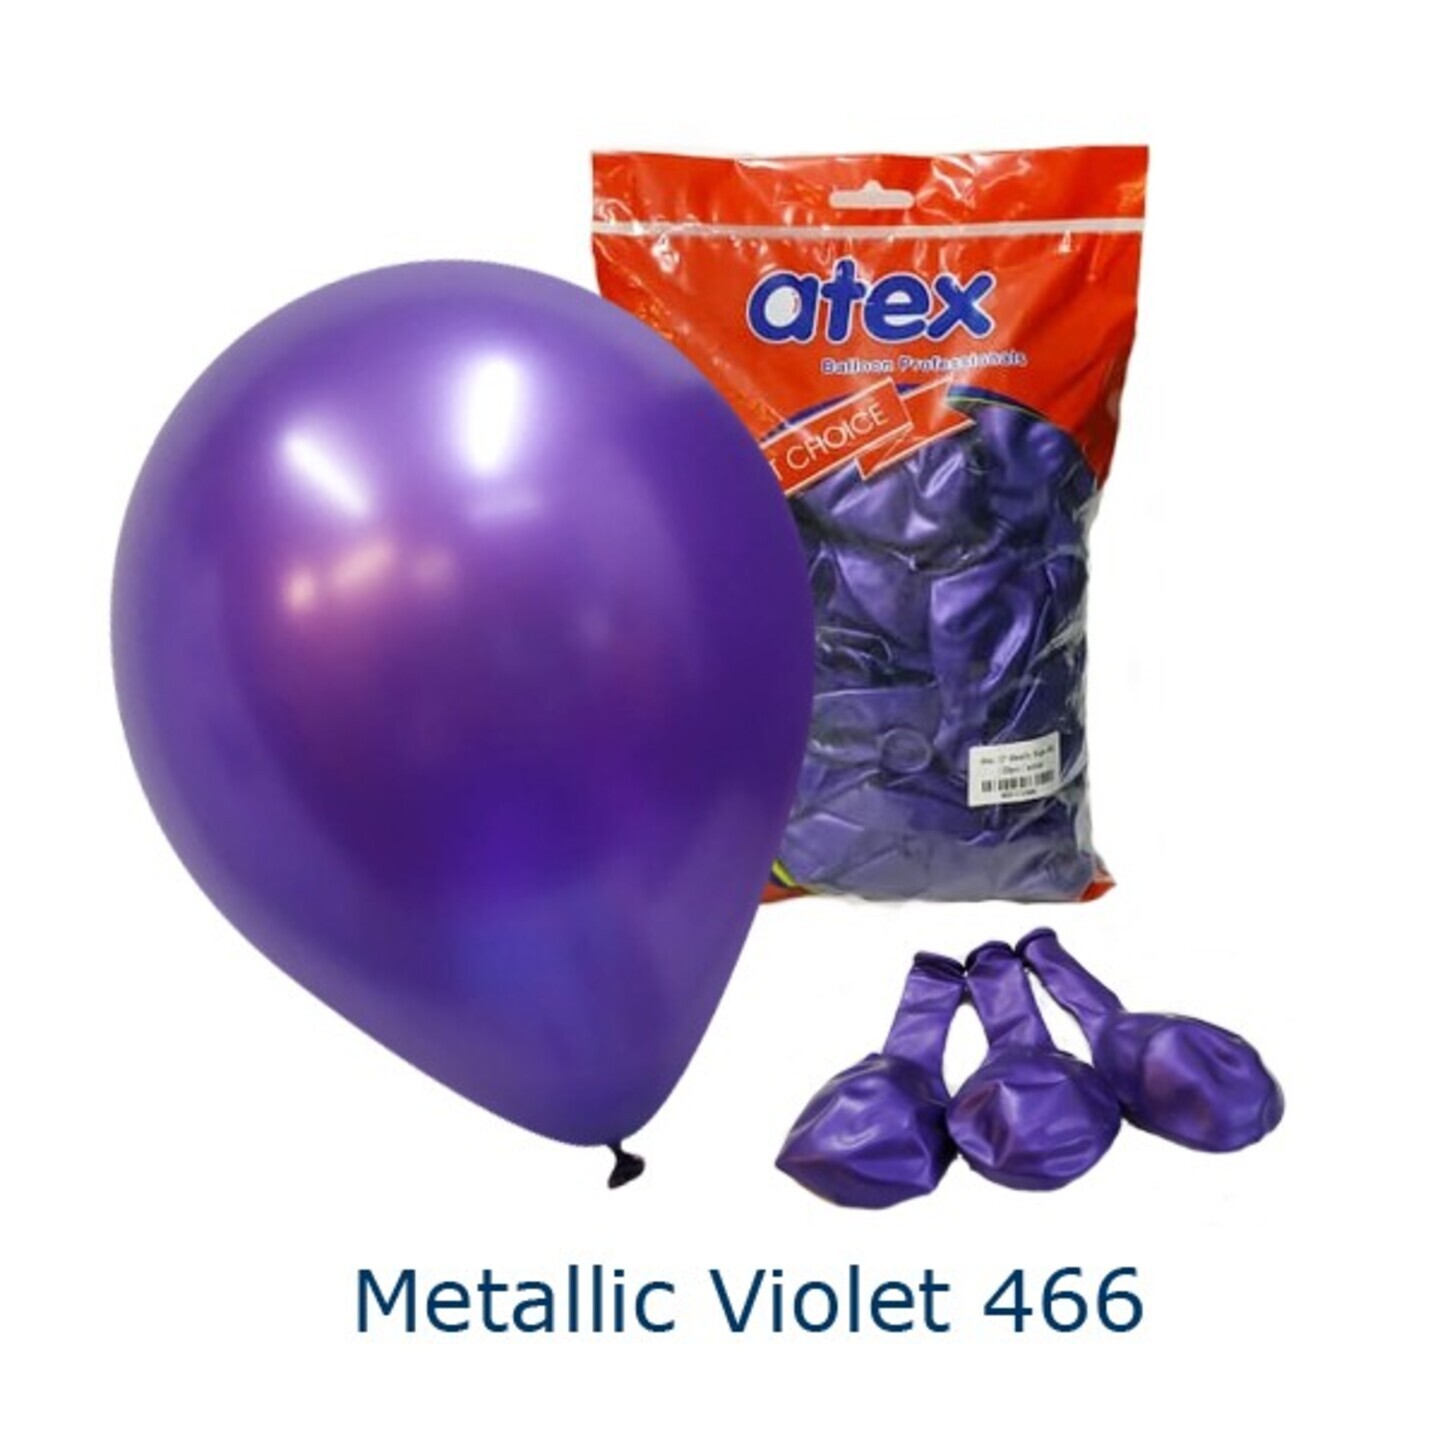 Metallic Violet 466